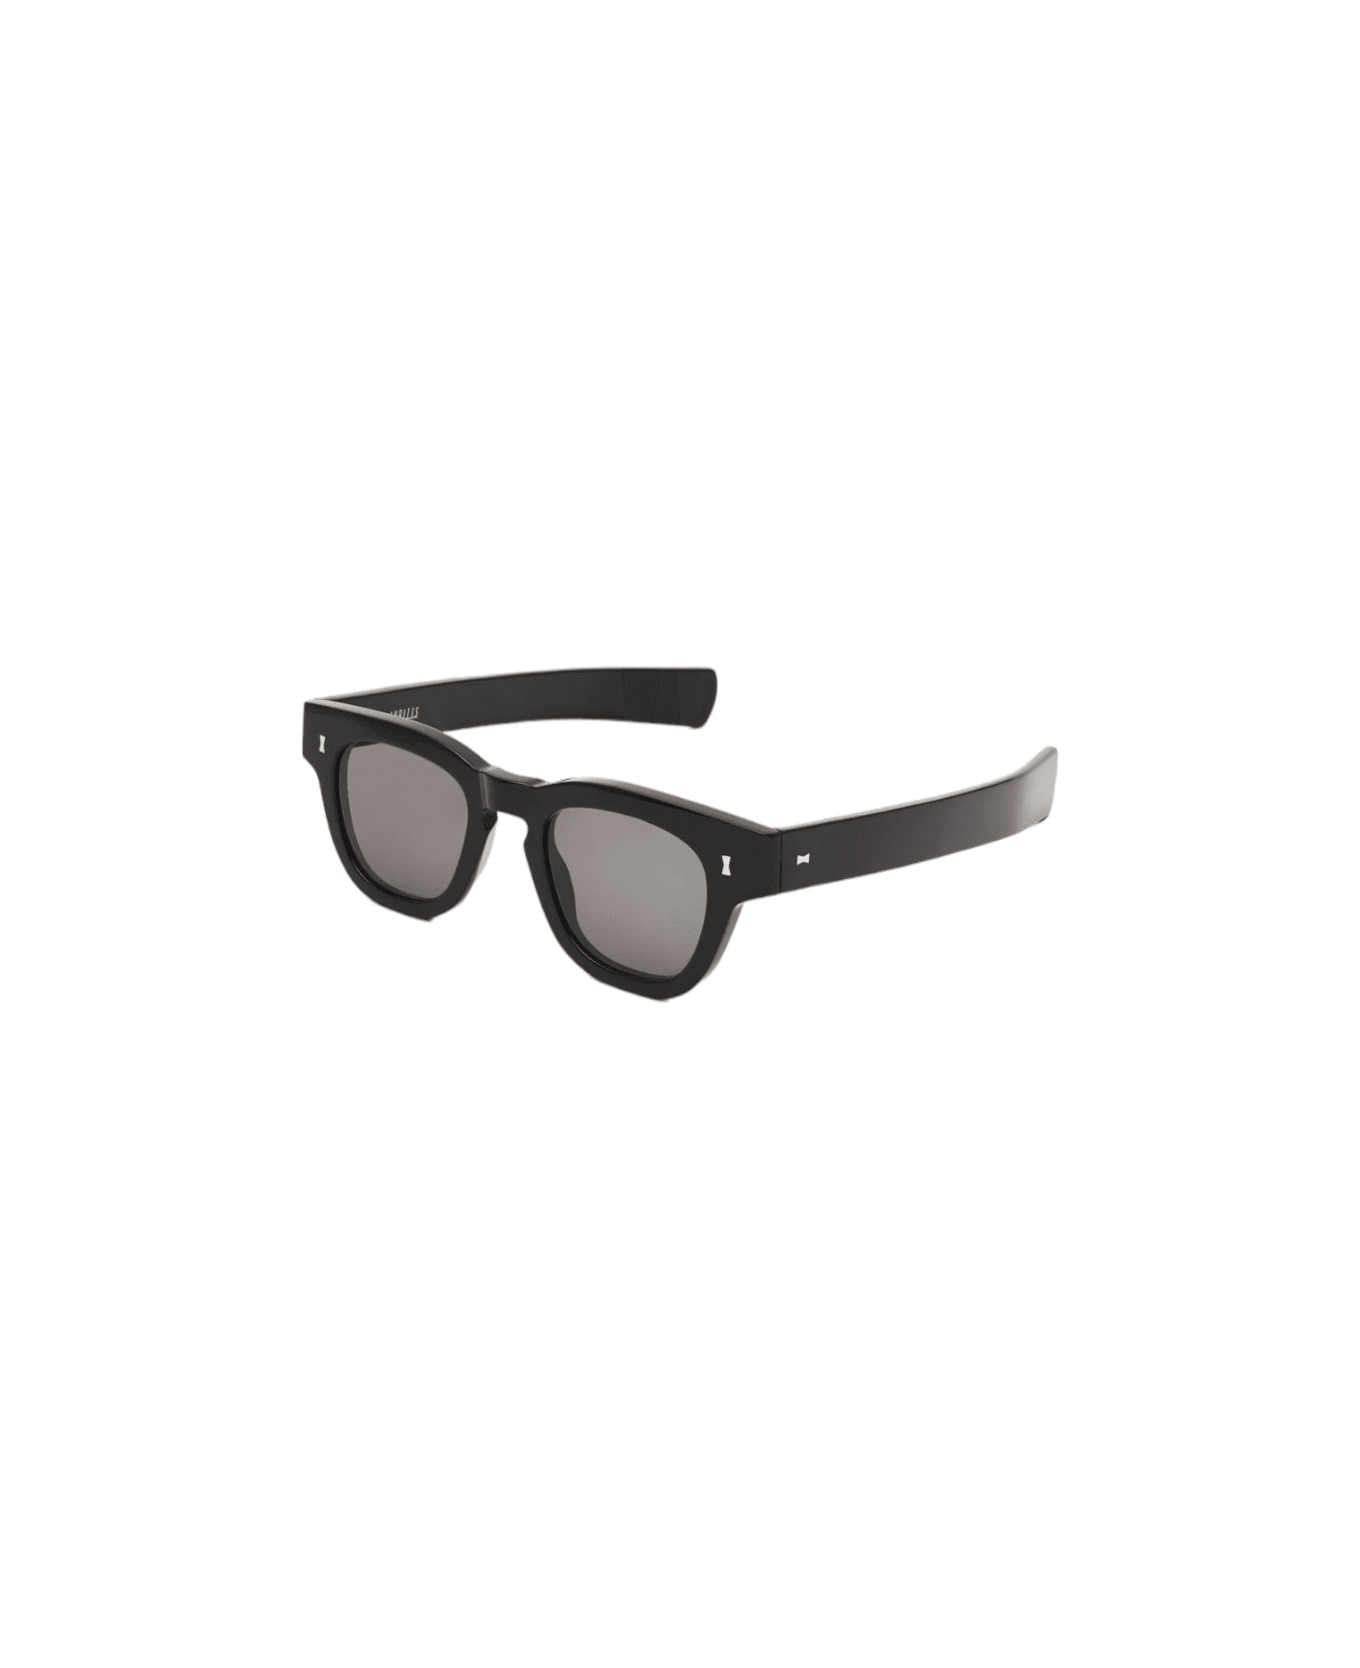 Cubitts Cruishank - Black Sunglasses サングラス